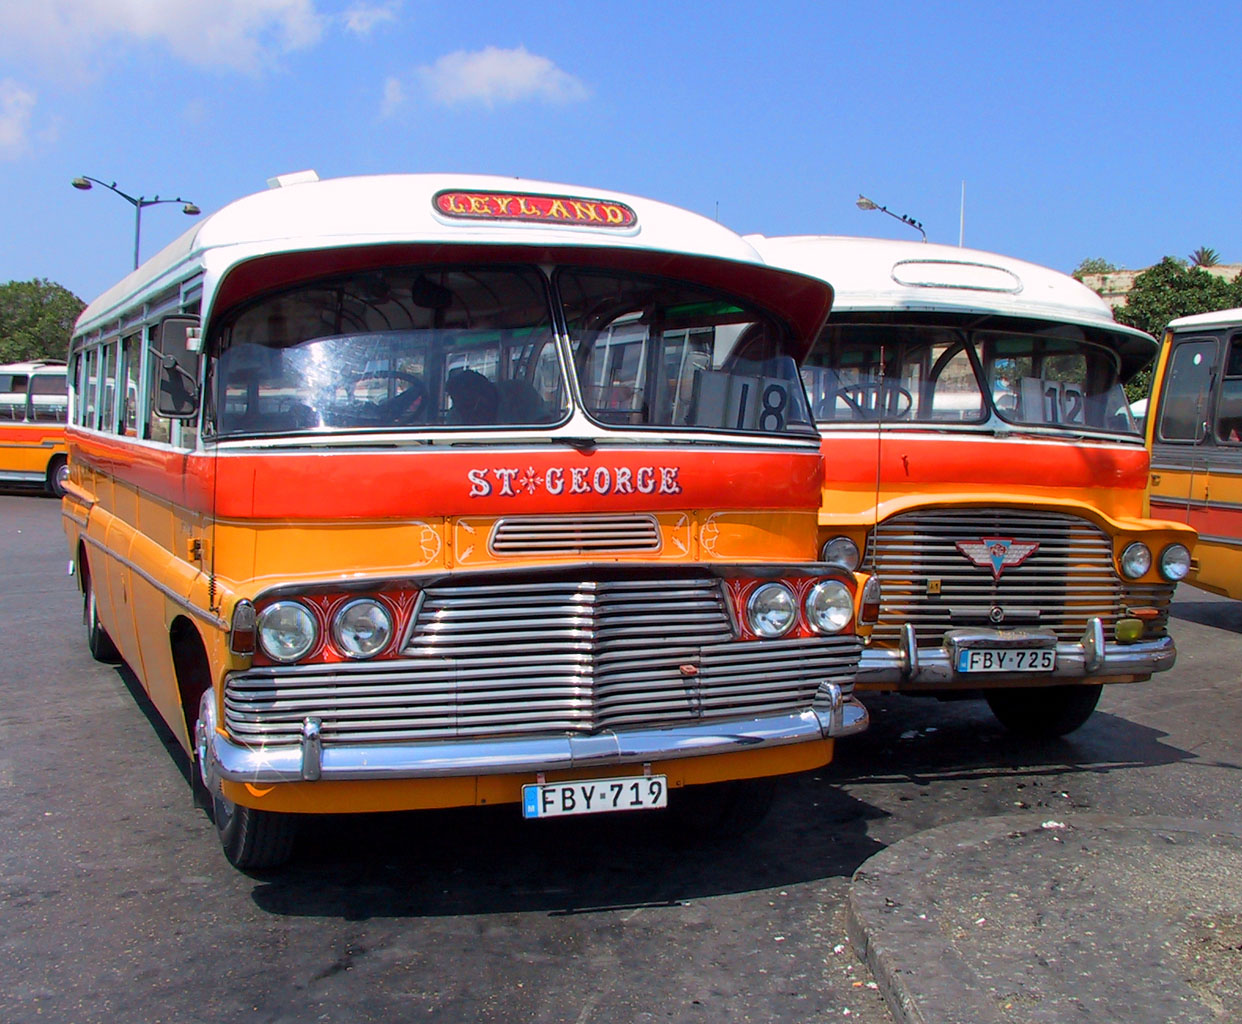 [Very old Line Busses at Malta. JMJ. Цифровой фотоаппарат Canon powershot Pro 90. Digital camera Canon powershot Pro 90]